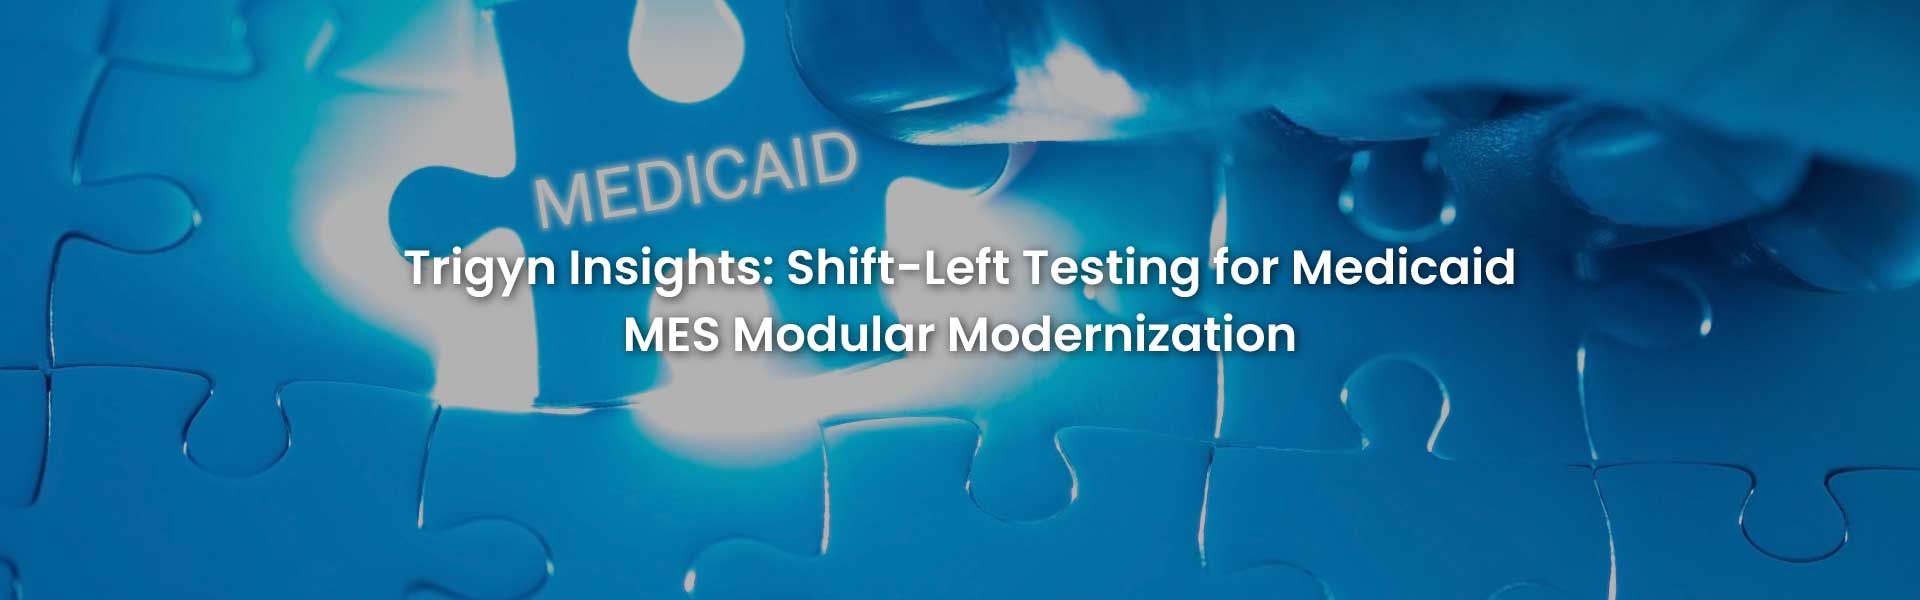 Testing Modular Modernization of Medicaid MES Systems